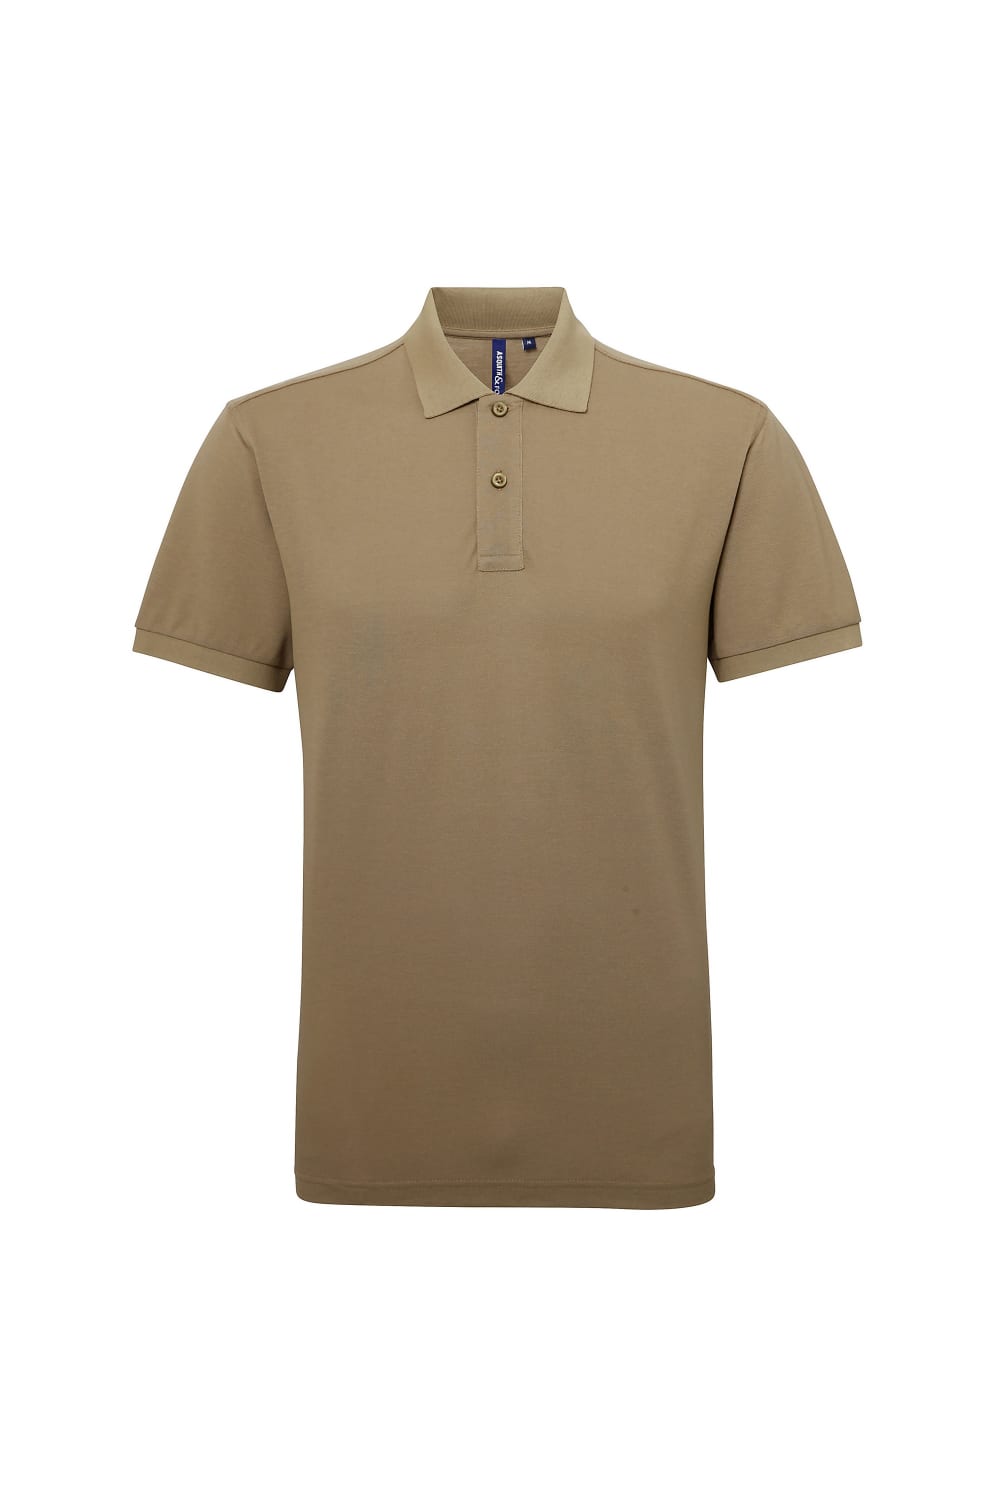 Mens Short Sleeve Performance Blend Polo Shirt (Khaki)